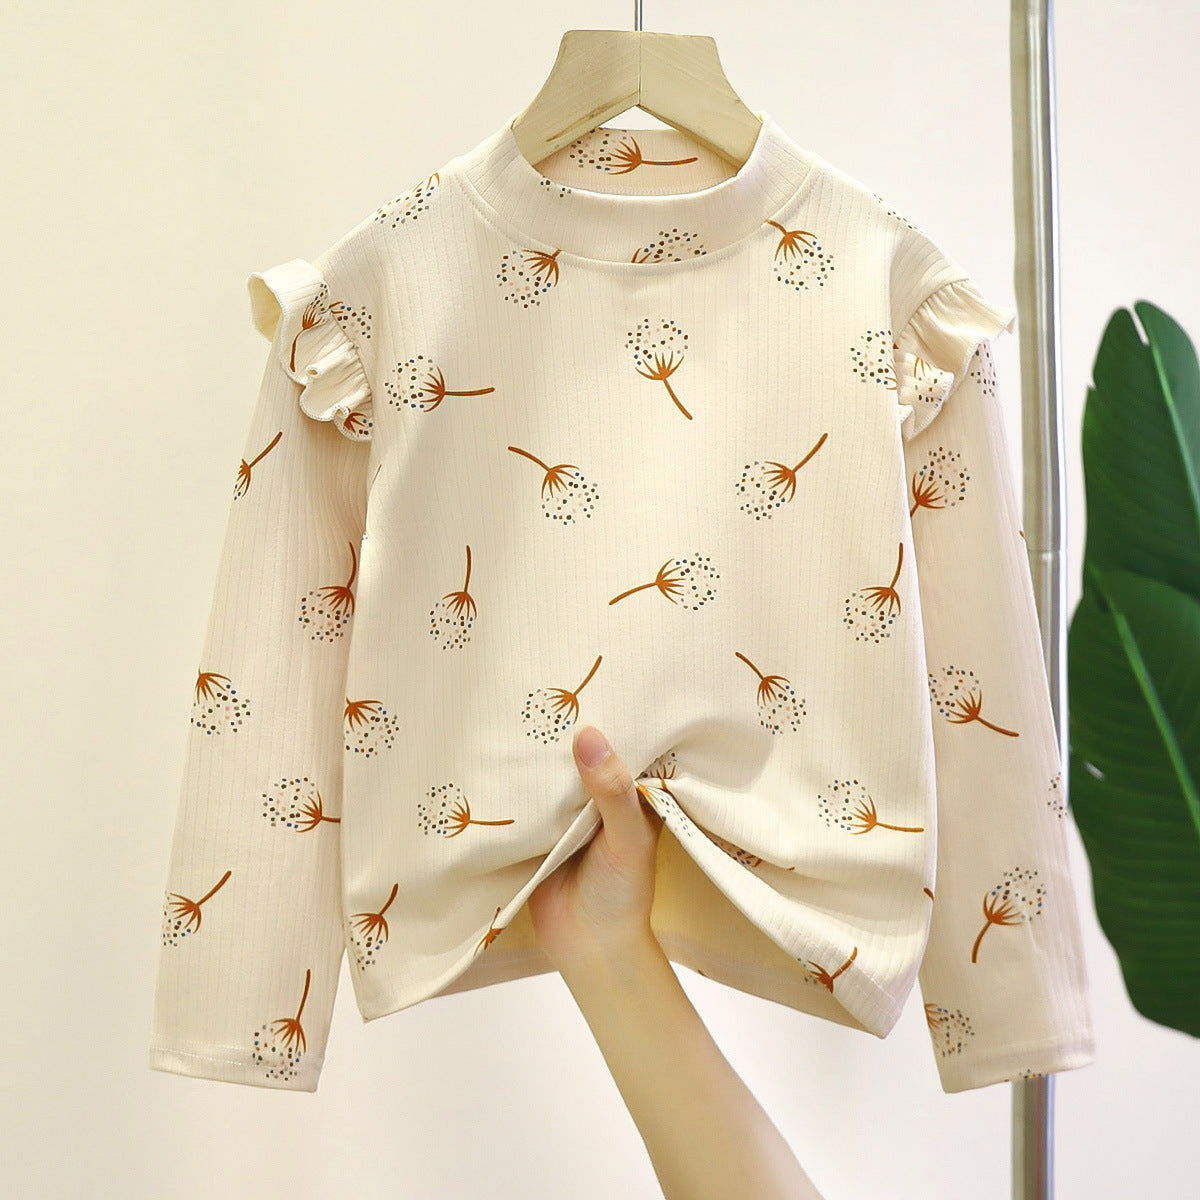 [351375] - Baju Atasan Blouse Bunga Fashion Import Anak Cewek - Motif Flower Color